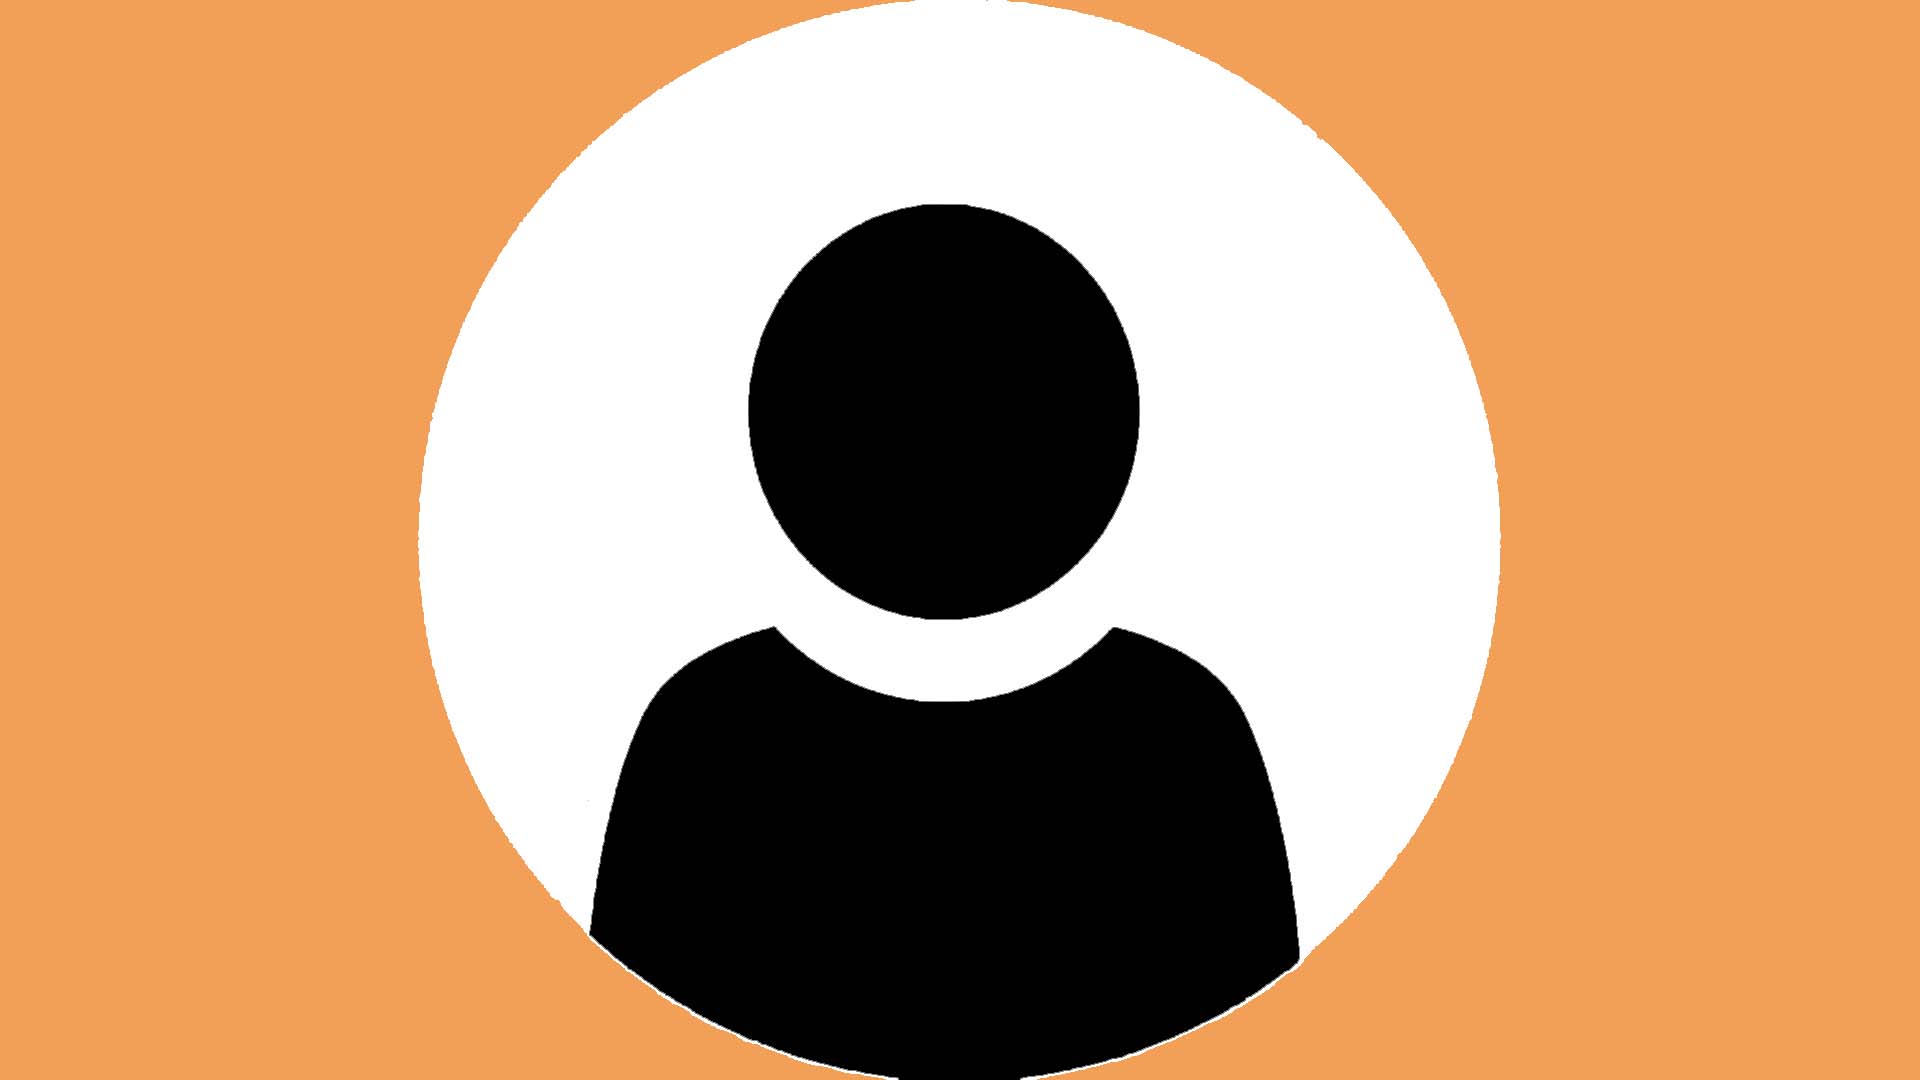 A black and white avatar profile picture